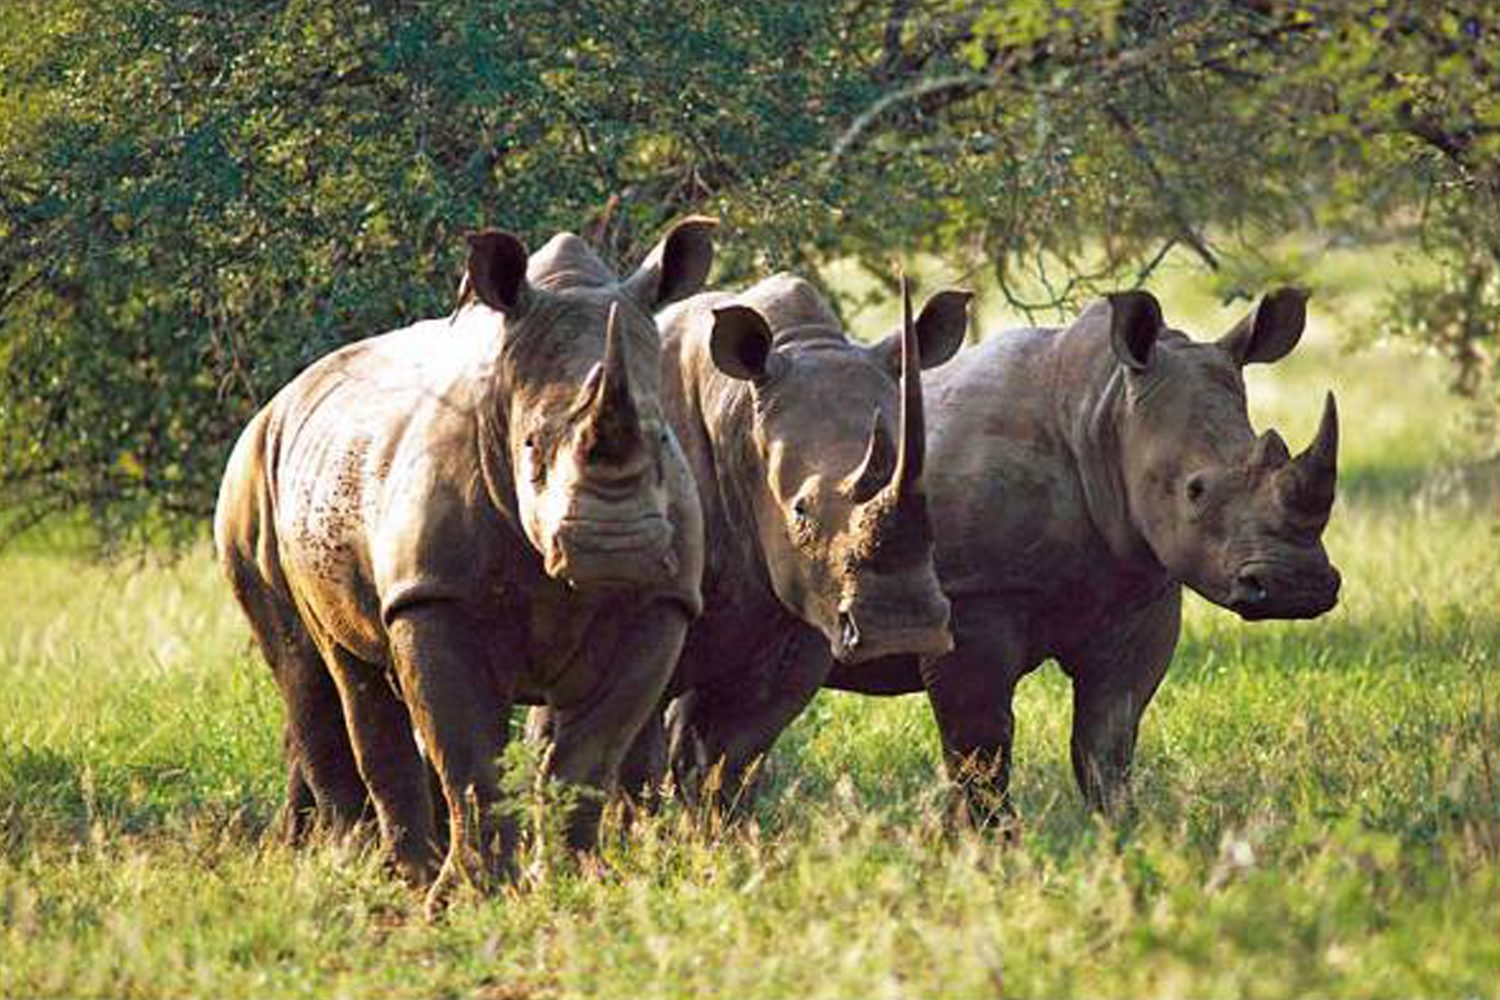 Rhino Sanctuary visit at Mkomazi